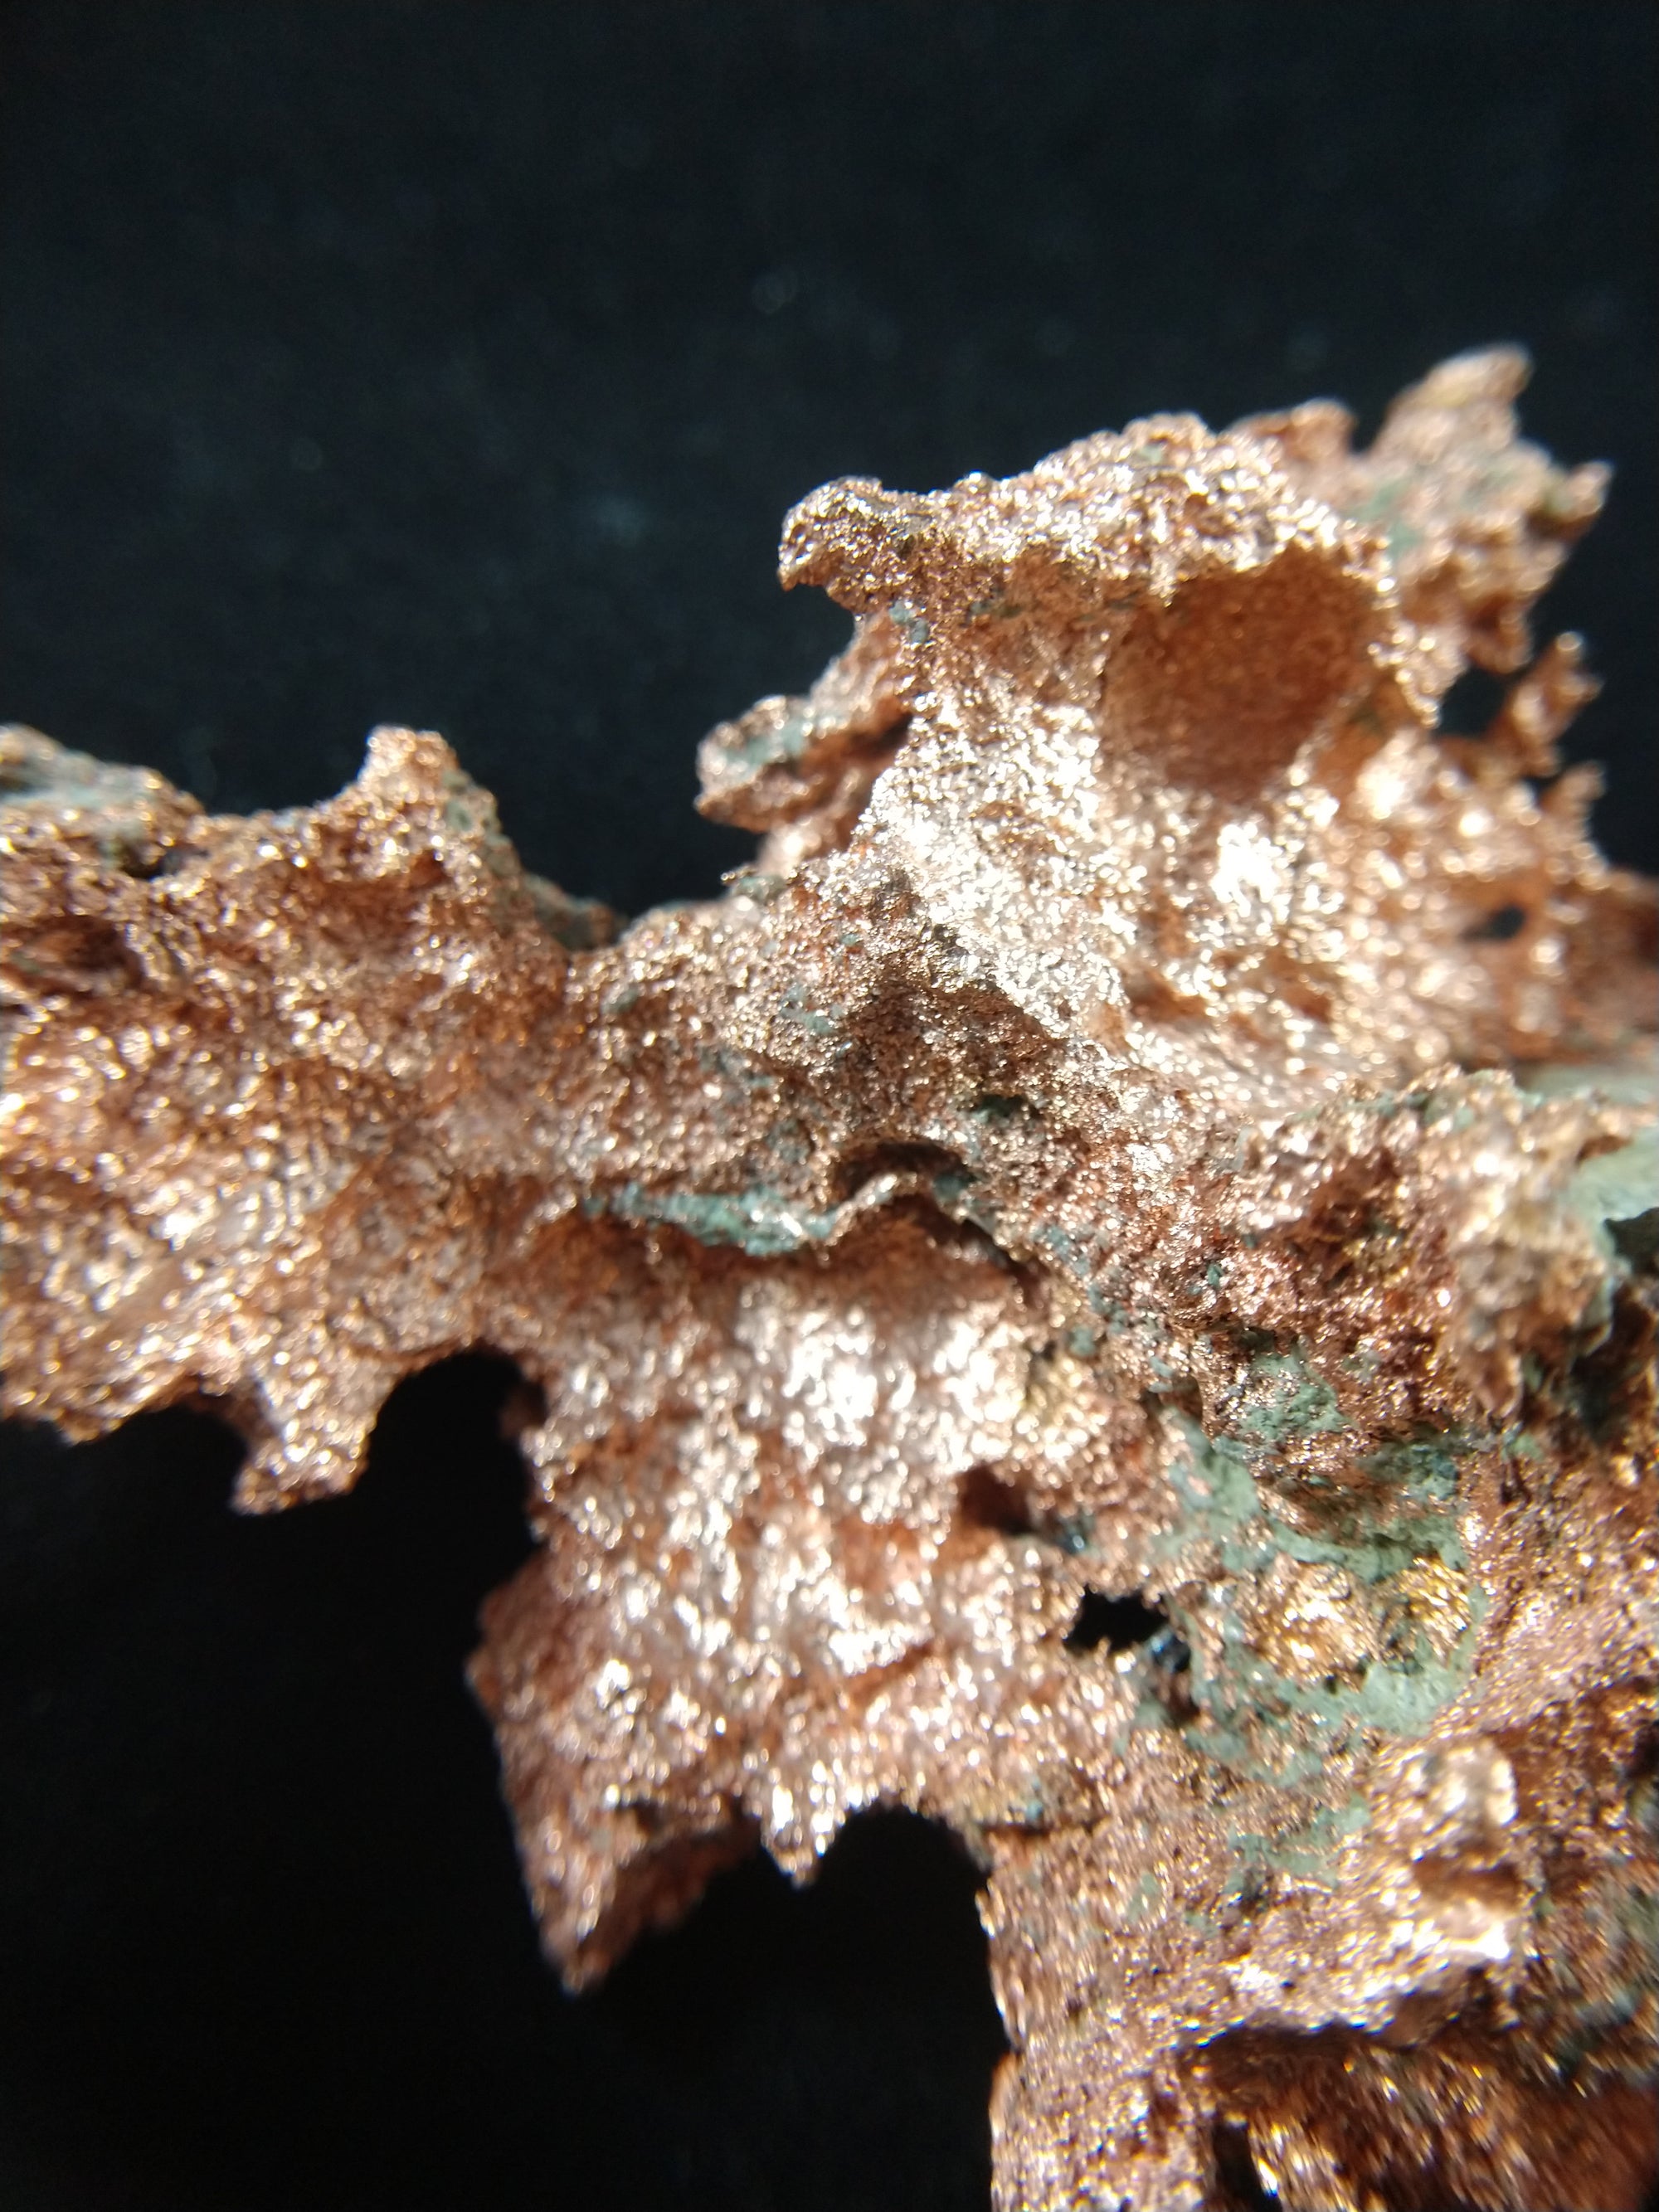 Native Copper from Michigan